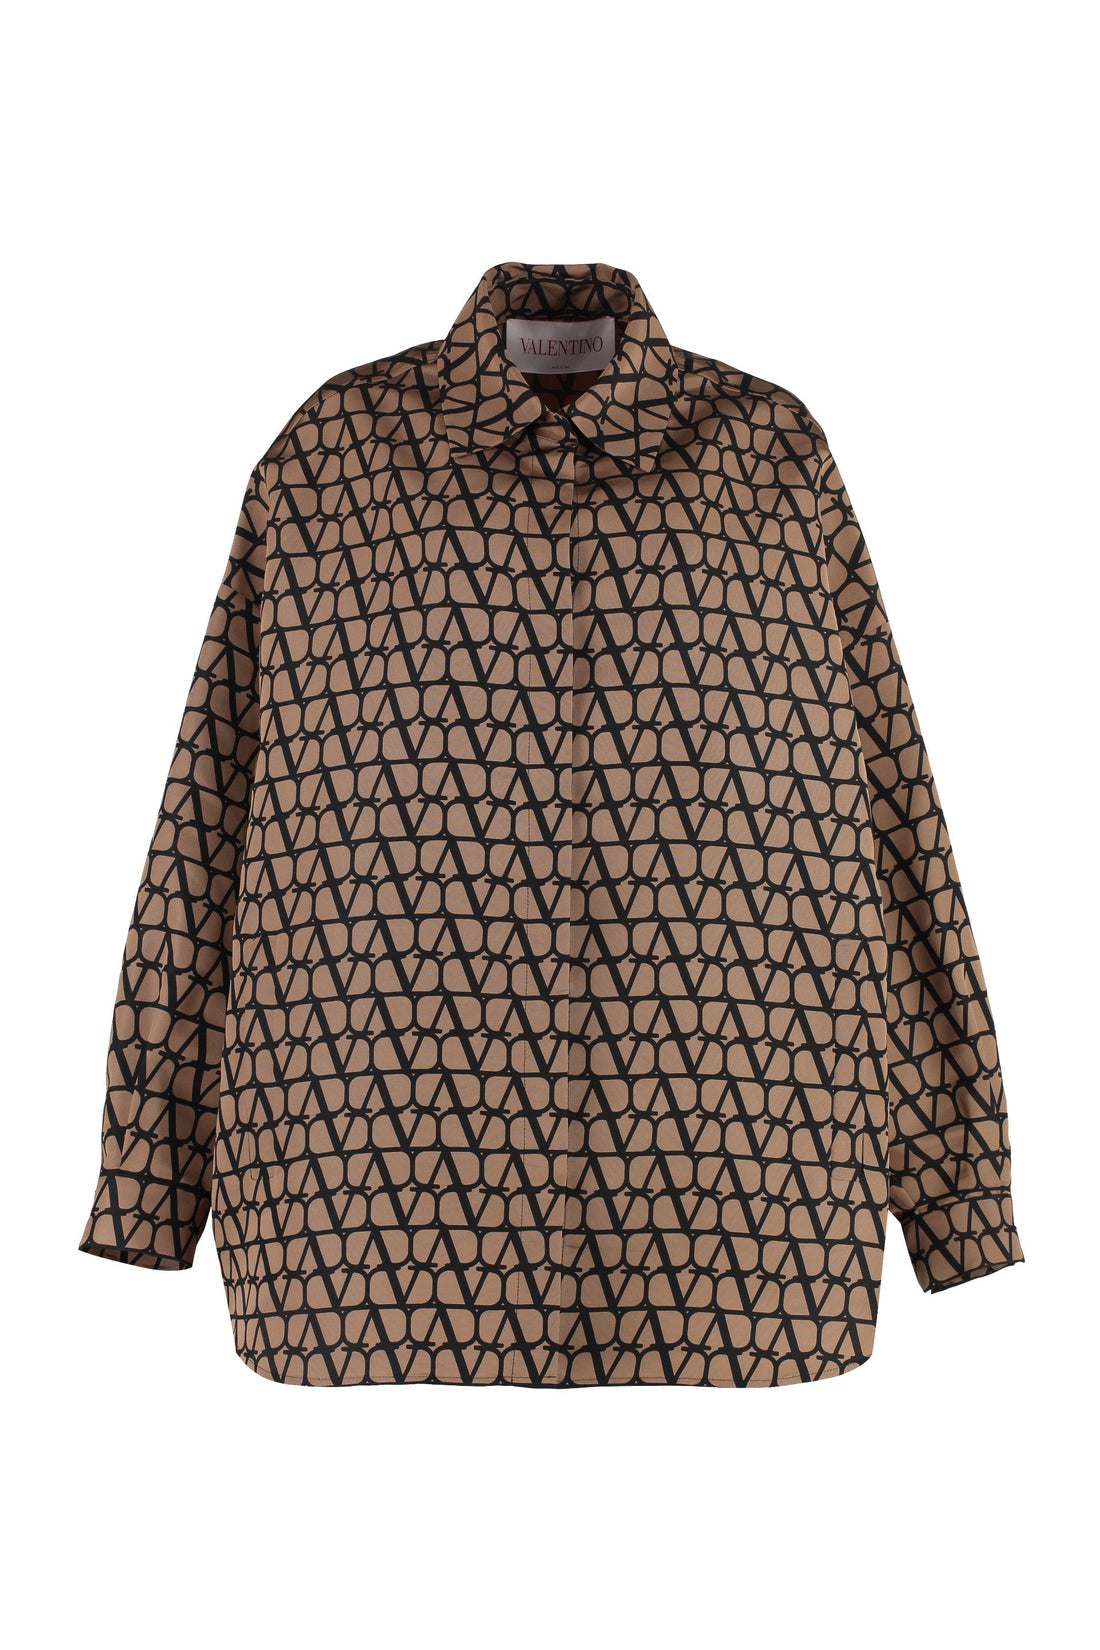 Valentino-OUTLET-SALE-Silk overshirt-ARCHIVIST